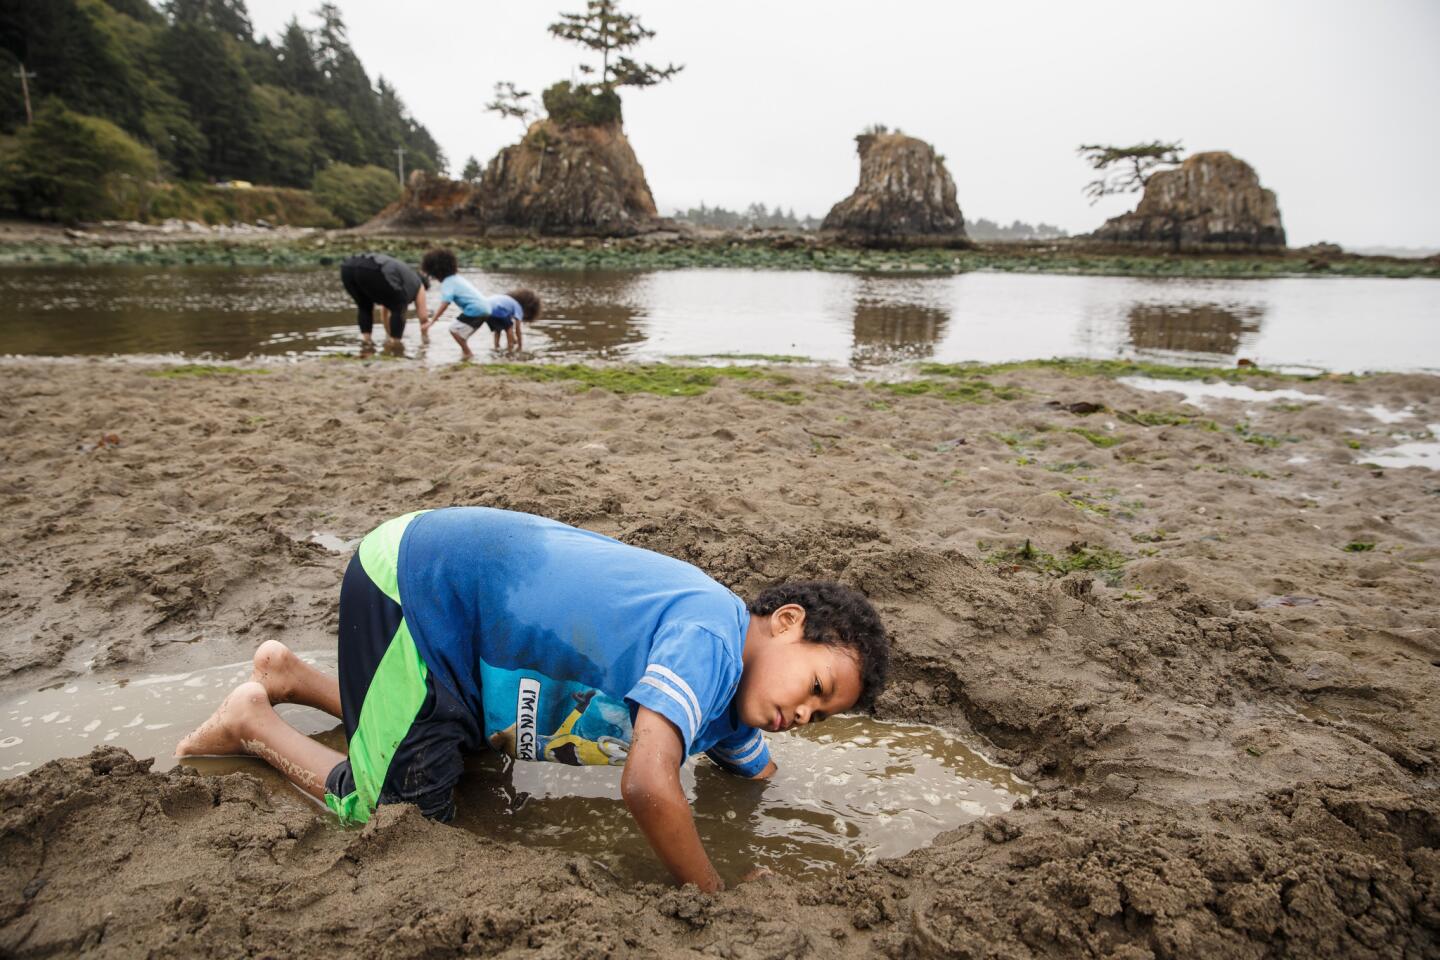 Crabbing & Clamming as Seasiders Do - Seaside Oregon